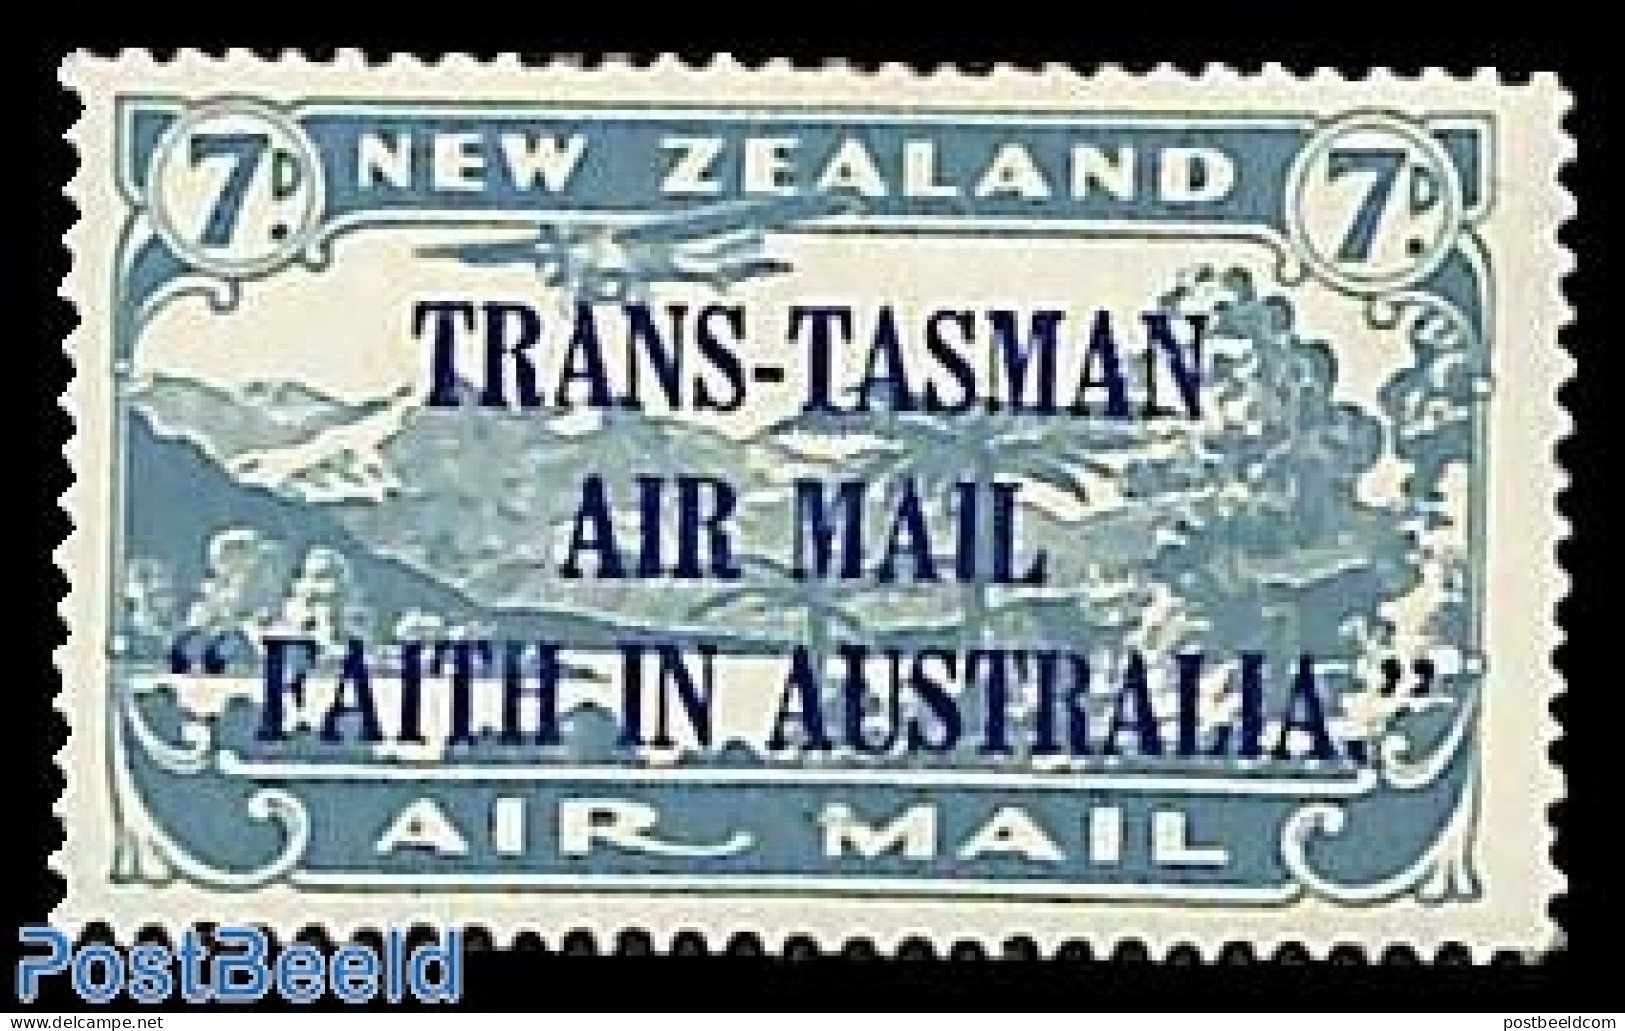 New Zealand 1934 Trans Tasman Flight 1v, Unused (hinged), Transport - Aircraft & Aviation - Unused Stamps